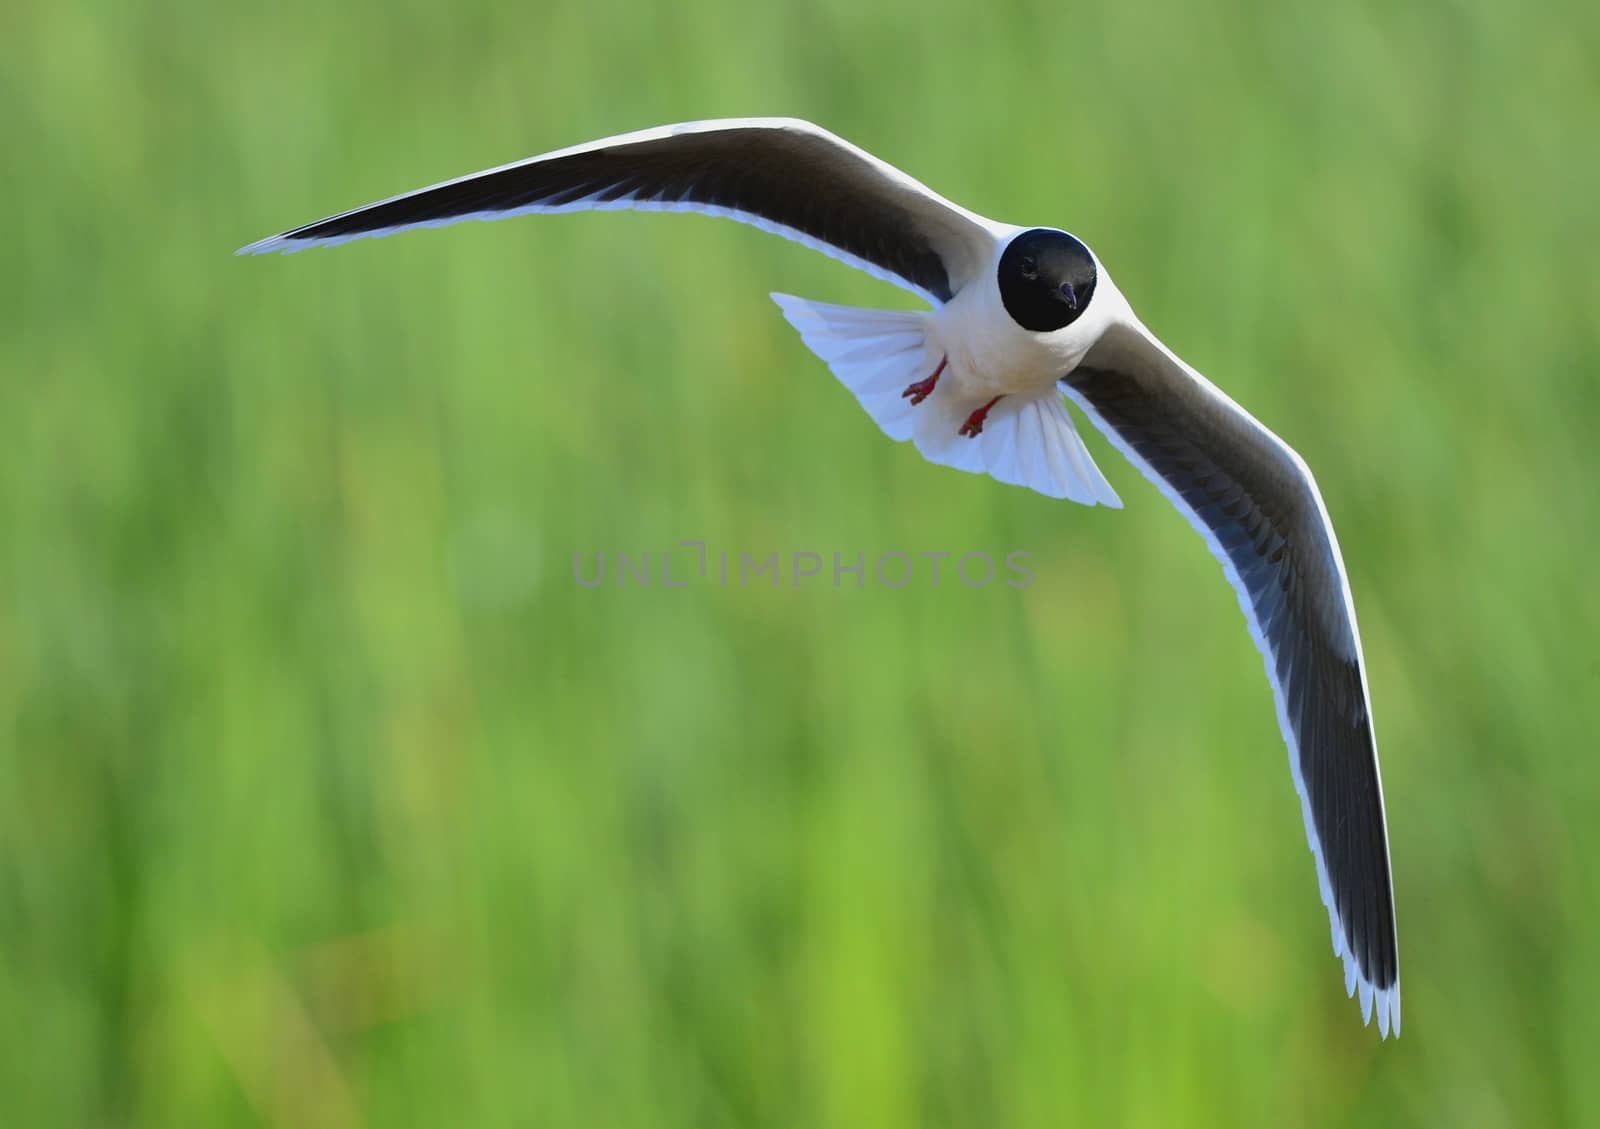 The black-headed gull (Chroicocephalus ridibundus) by SURZ